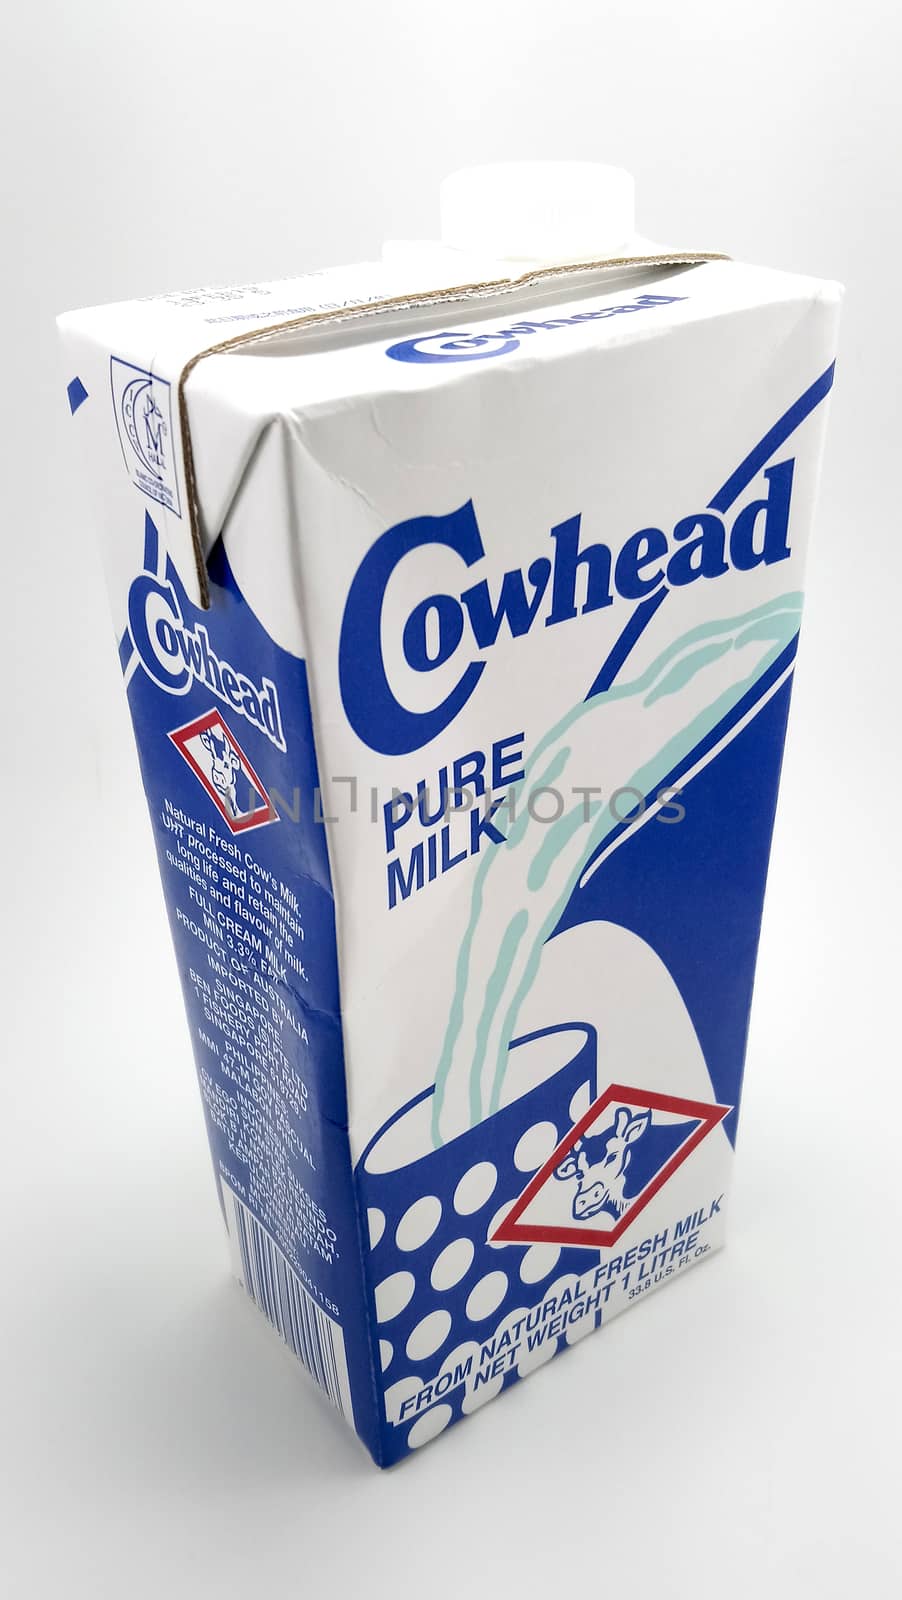 MANILA, PH - JUNE 23 - Cowhead pure milk on June 23, 2020 in Manila, Philippines.